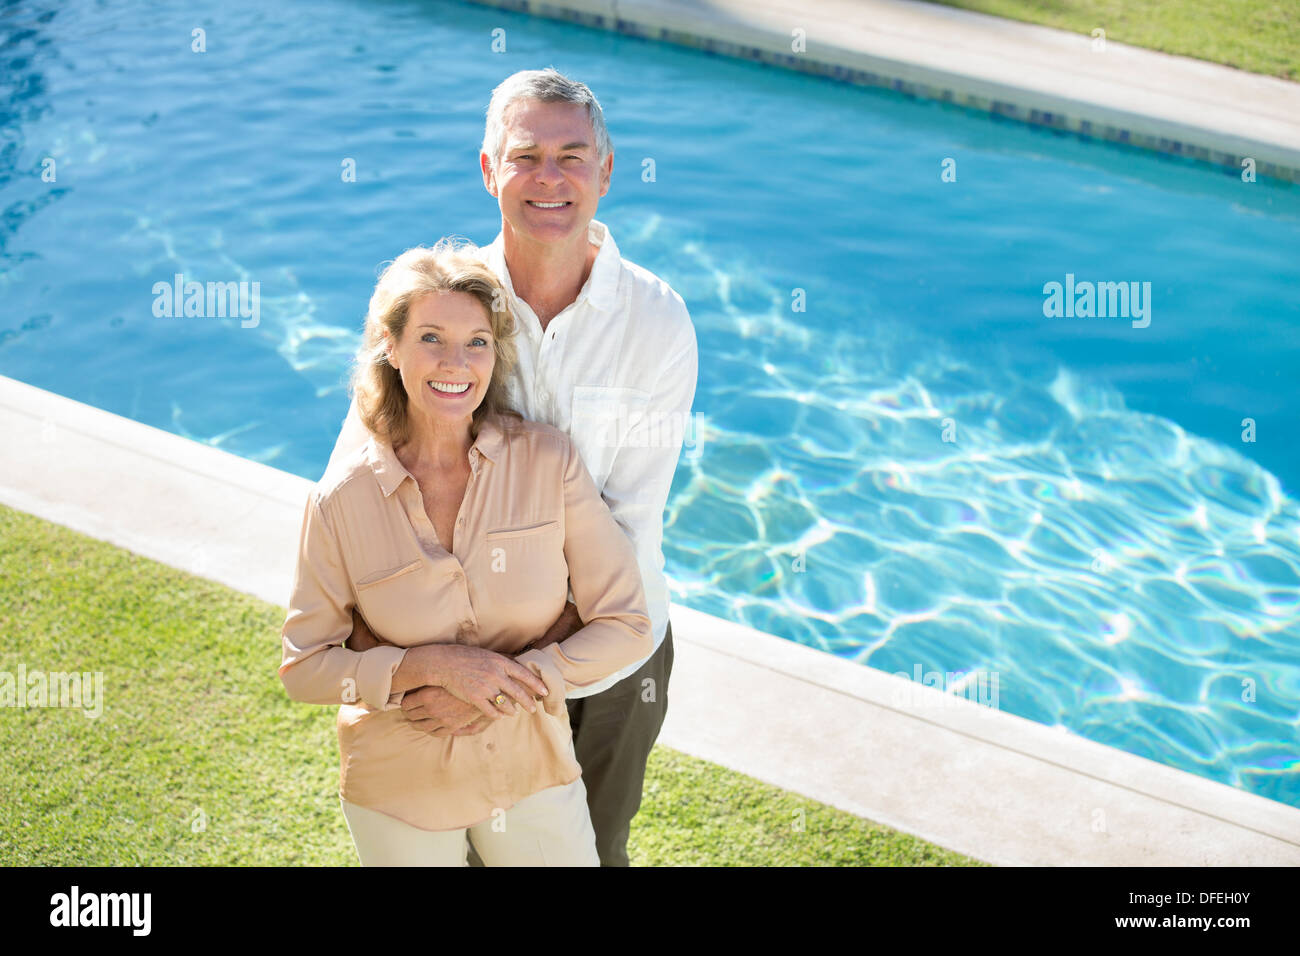 Portrait of smiling senior couple at poolside Banque D'Images